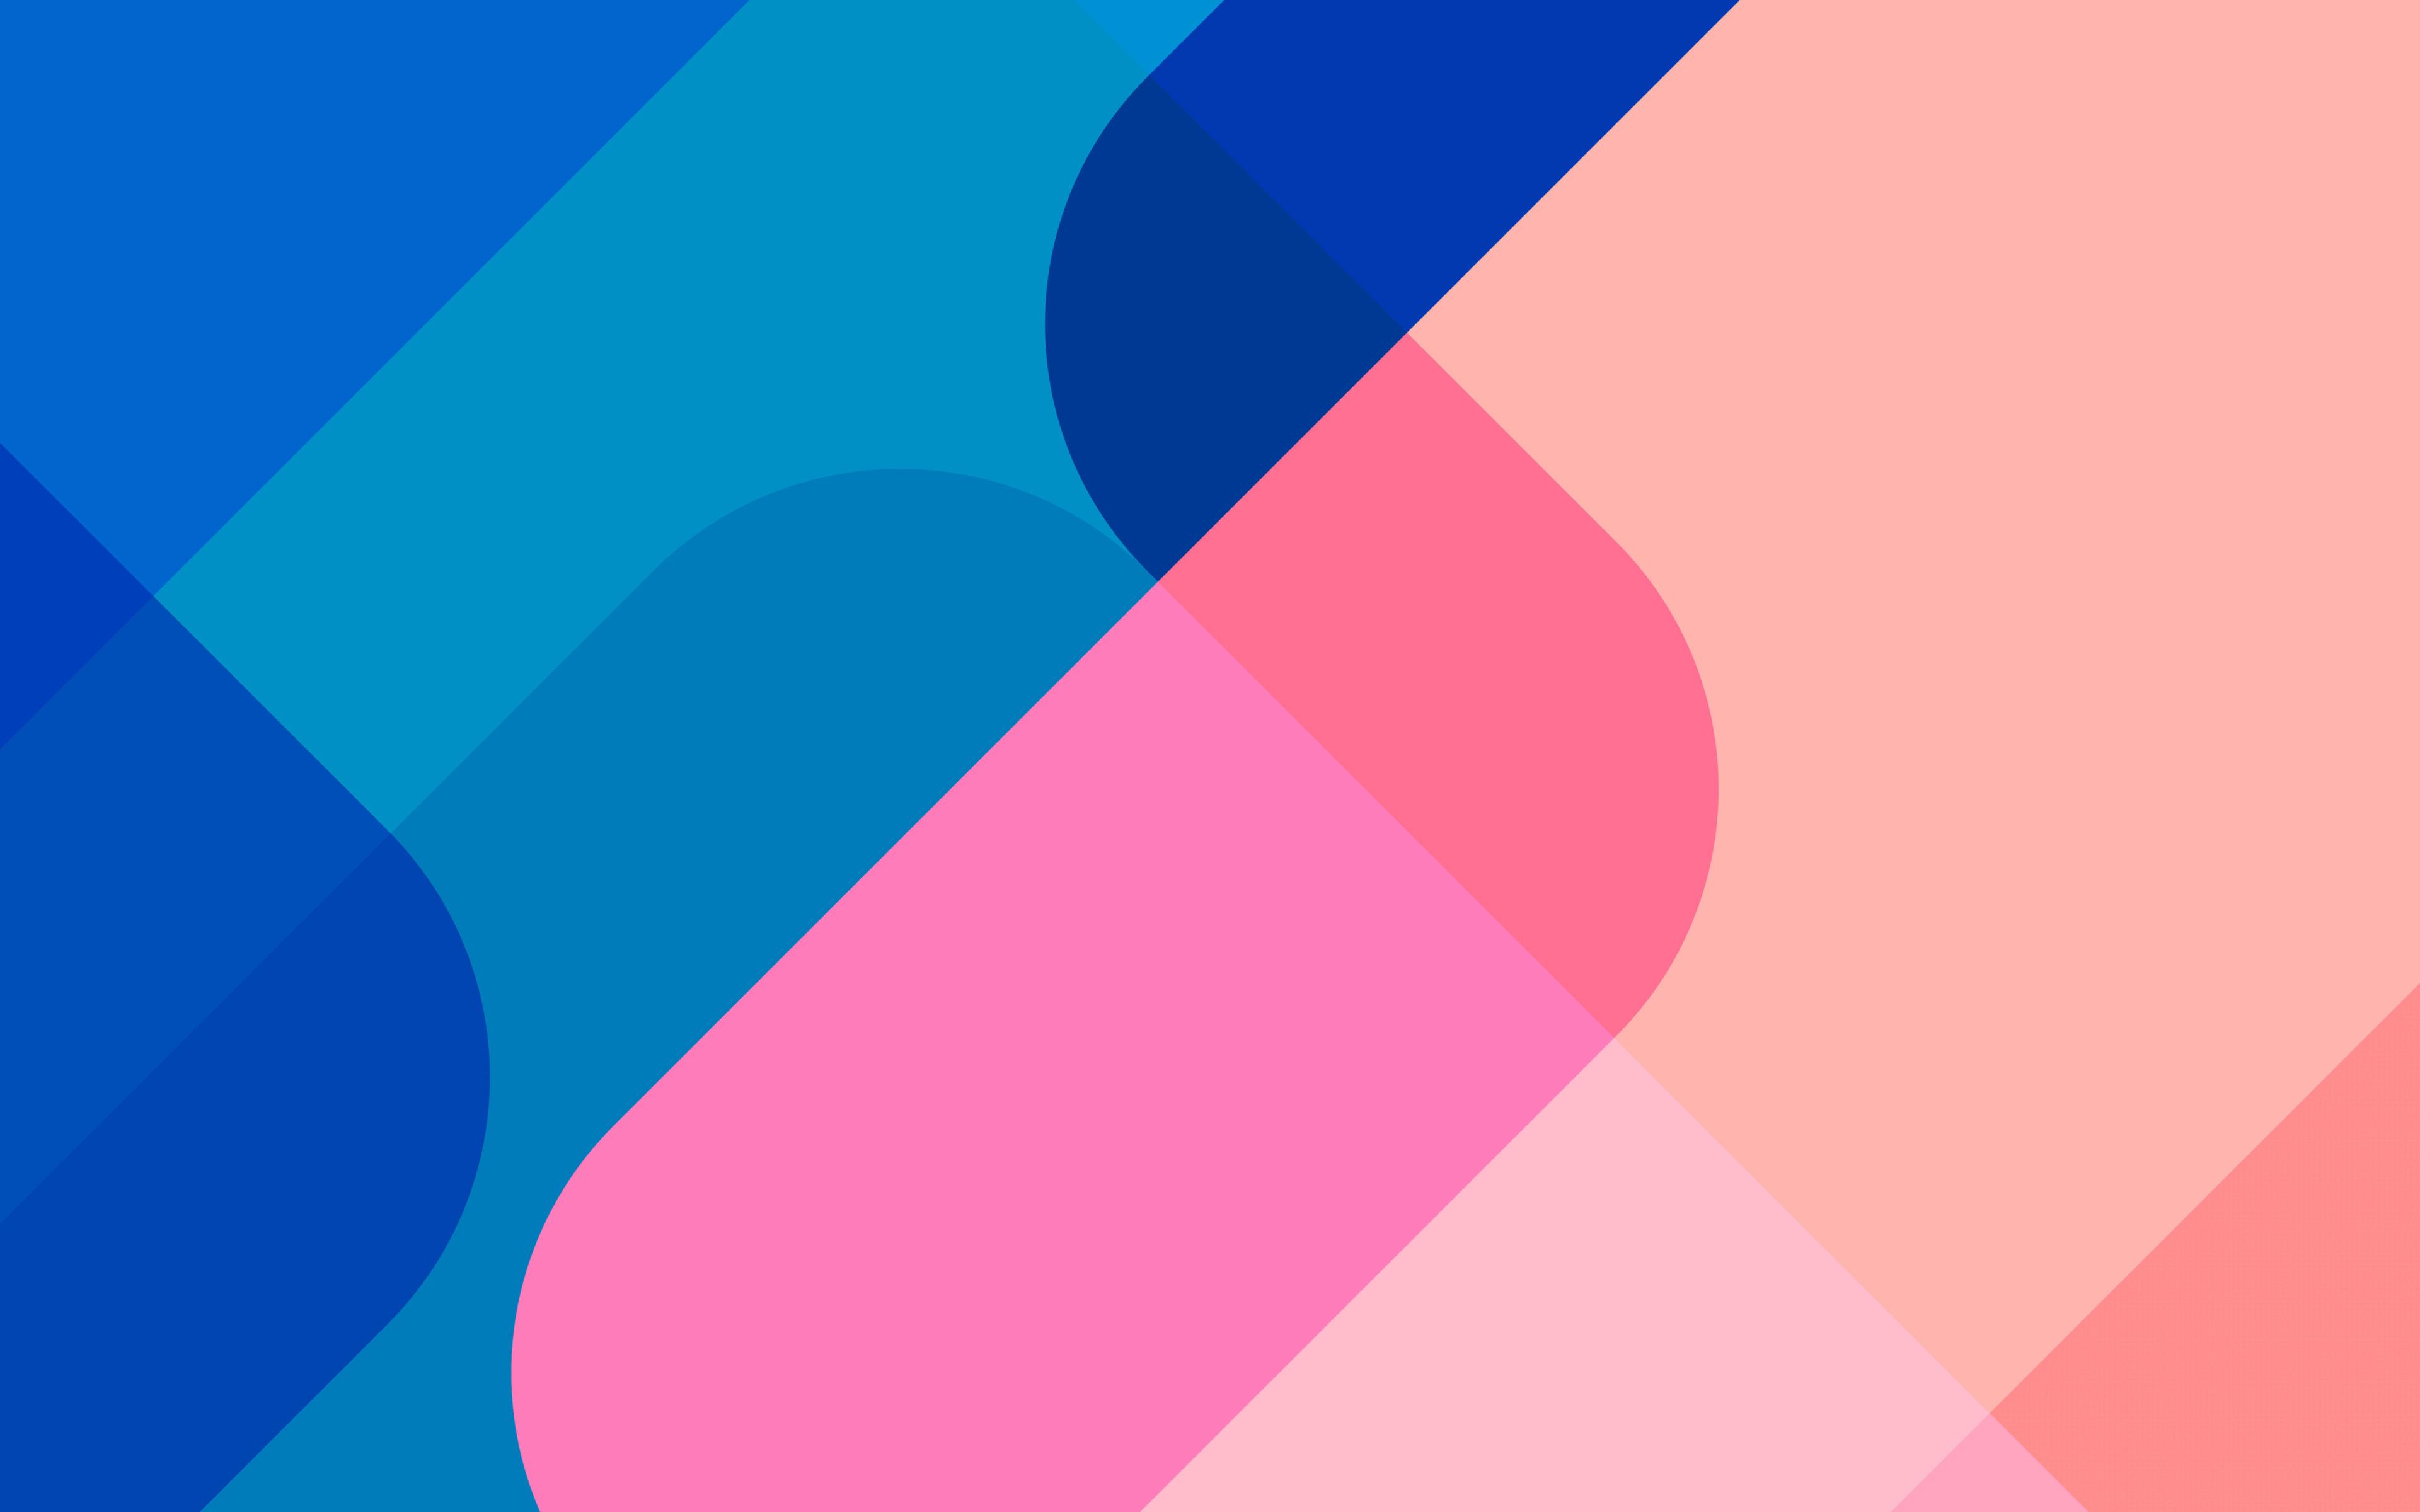 Download wallpaper 4k, material design, pink and blue